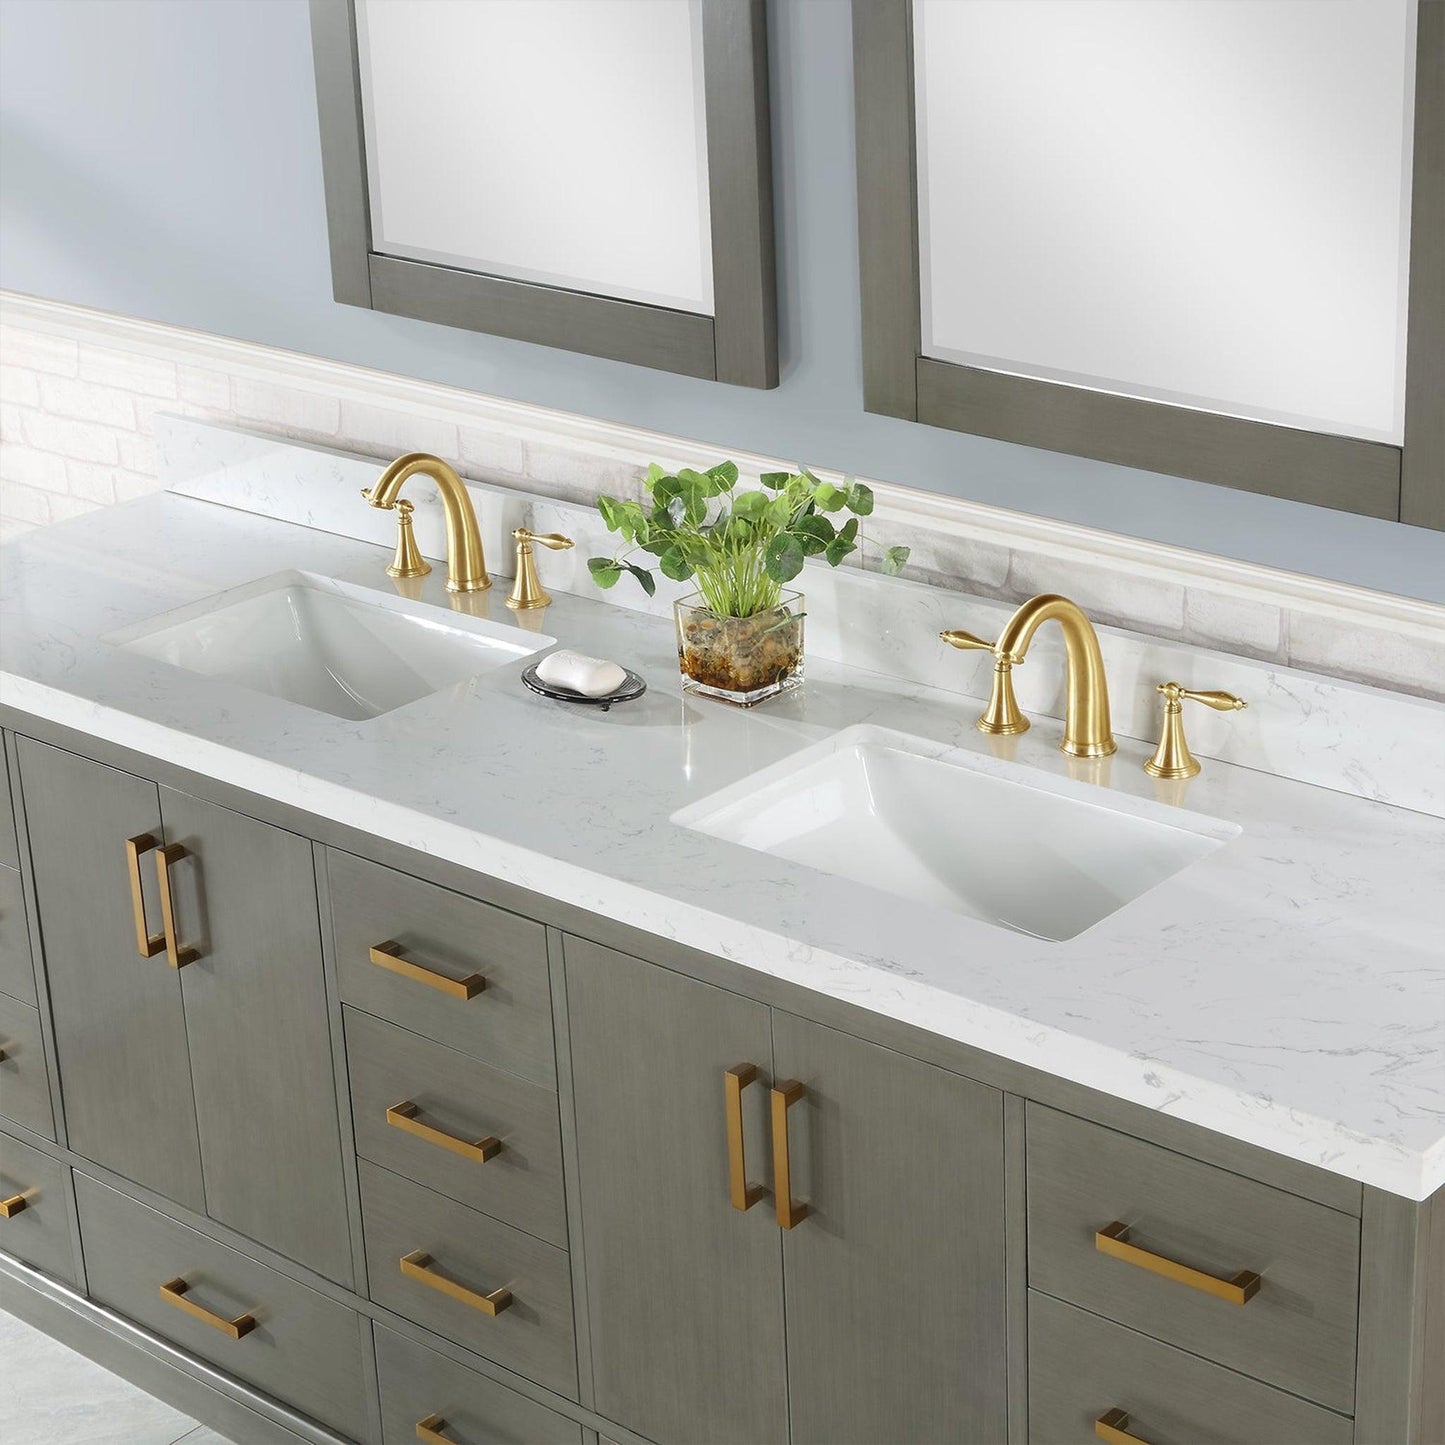 Altair Monna 84" Gray Pine Freestanding Double Bathroom Vanity Set With Mirror, Aosta White Composite Stone Top, Two Rectangular Undermount Ceramic Sinks, Overflow, and Backsplash